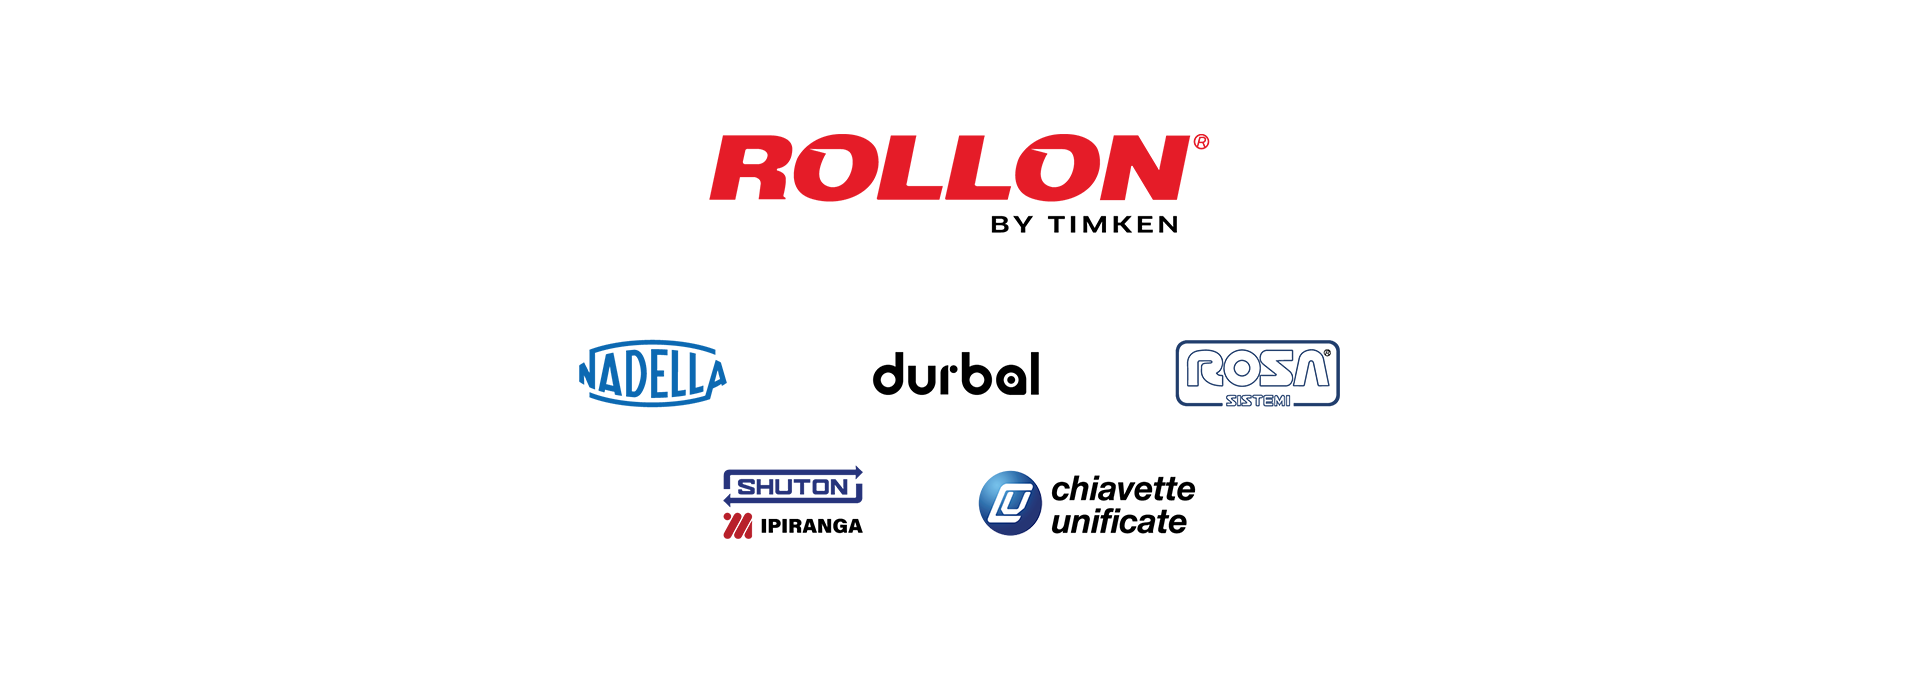 Rollon presents its new comprehensive product portfolio